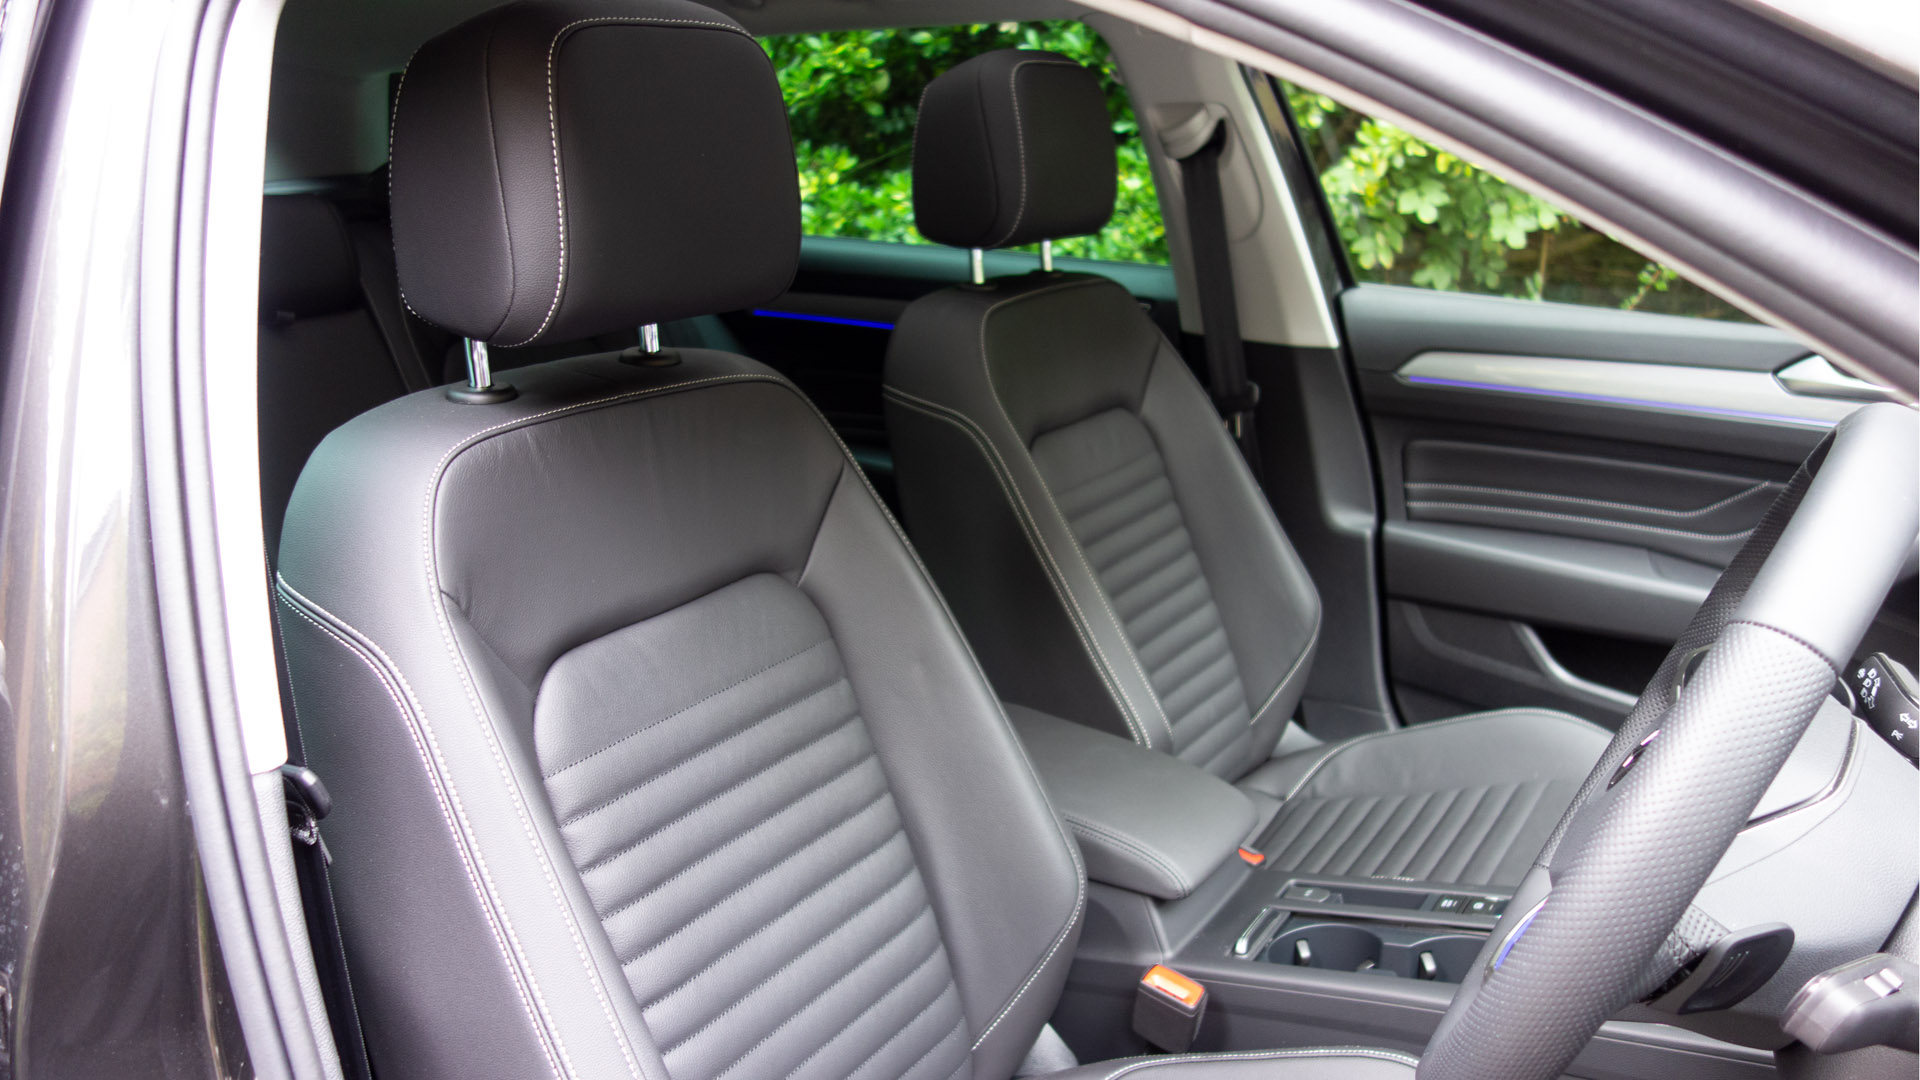 Volkswagen Passat Estate GTE front seat